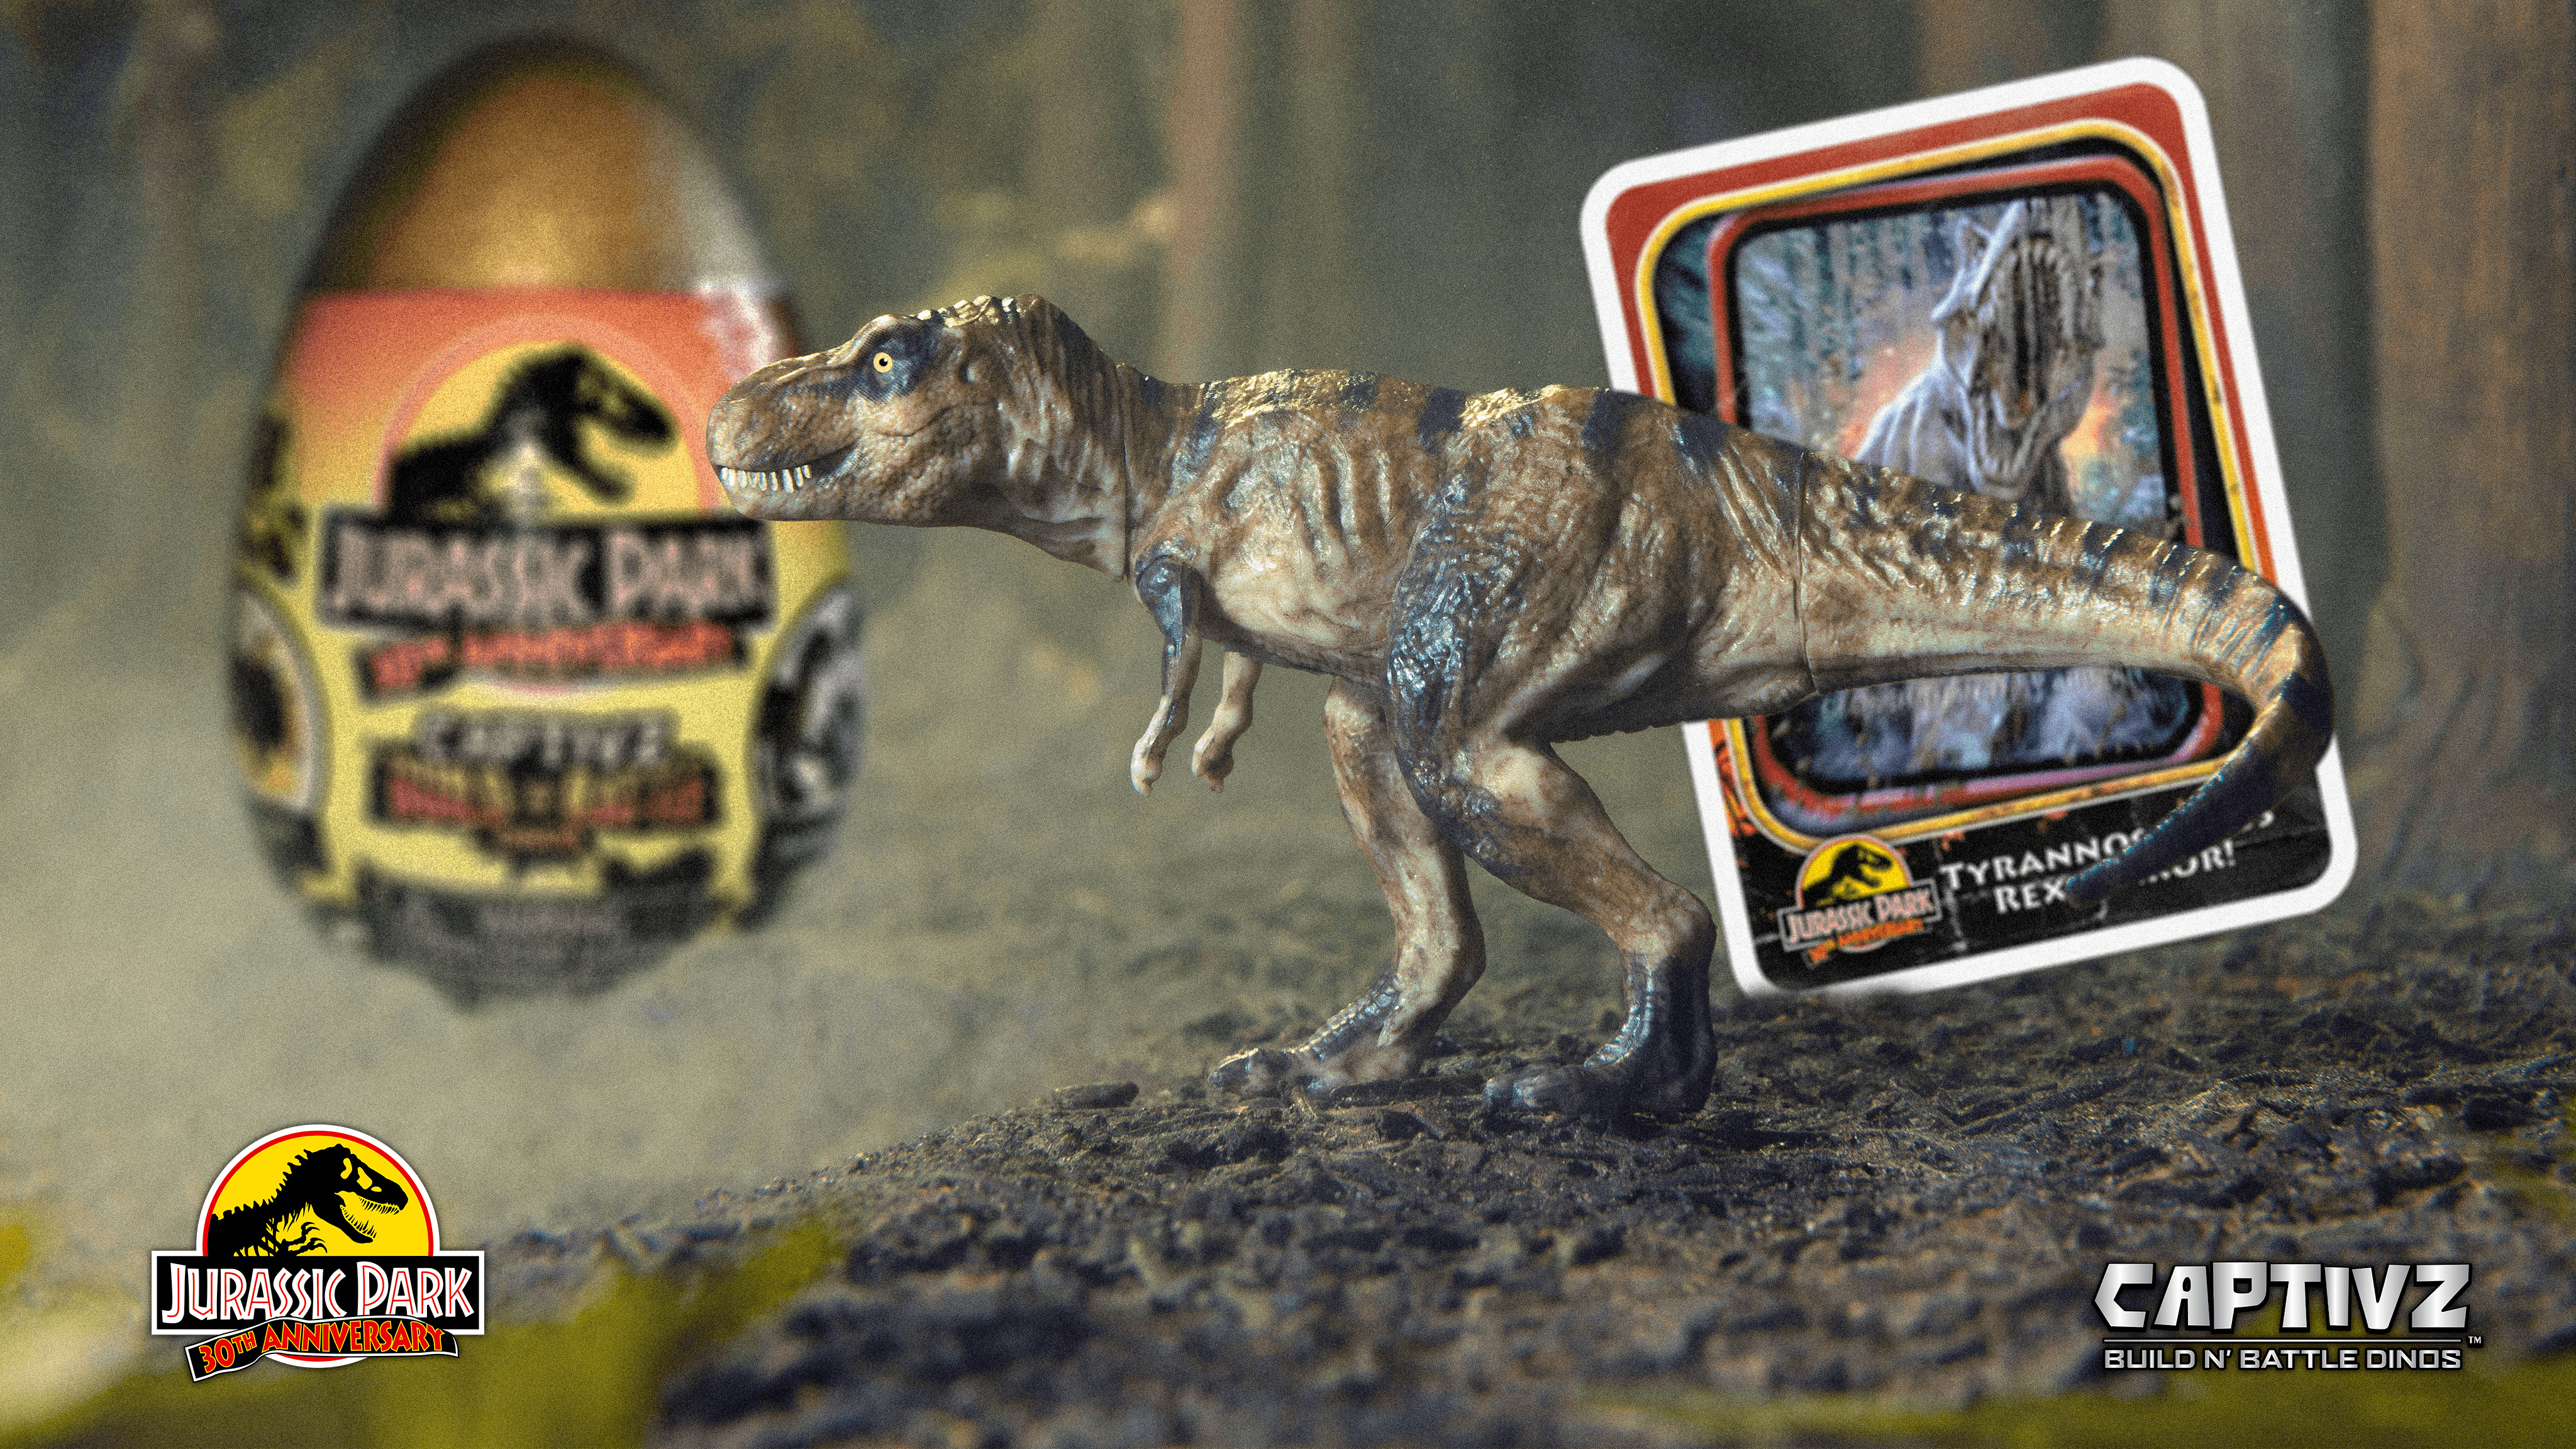 Exclusive: Jurassic Park 30th Anniversary Captivz Collector Figures Roaring Into Walmart Soon!